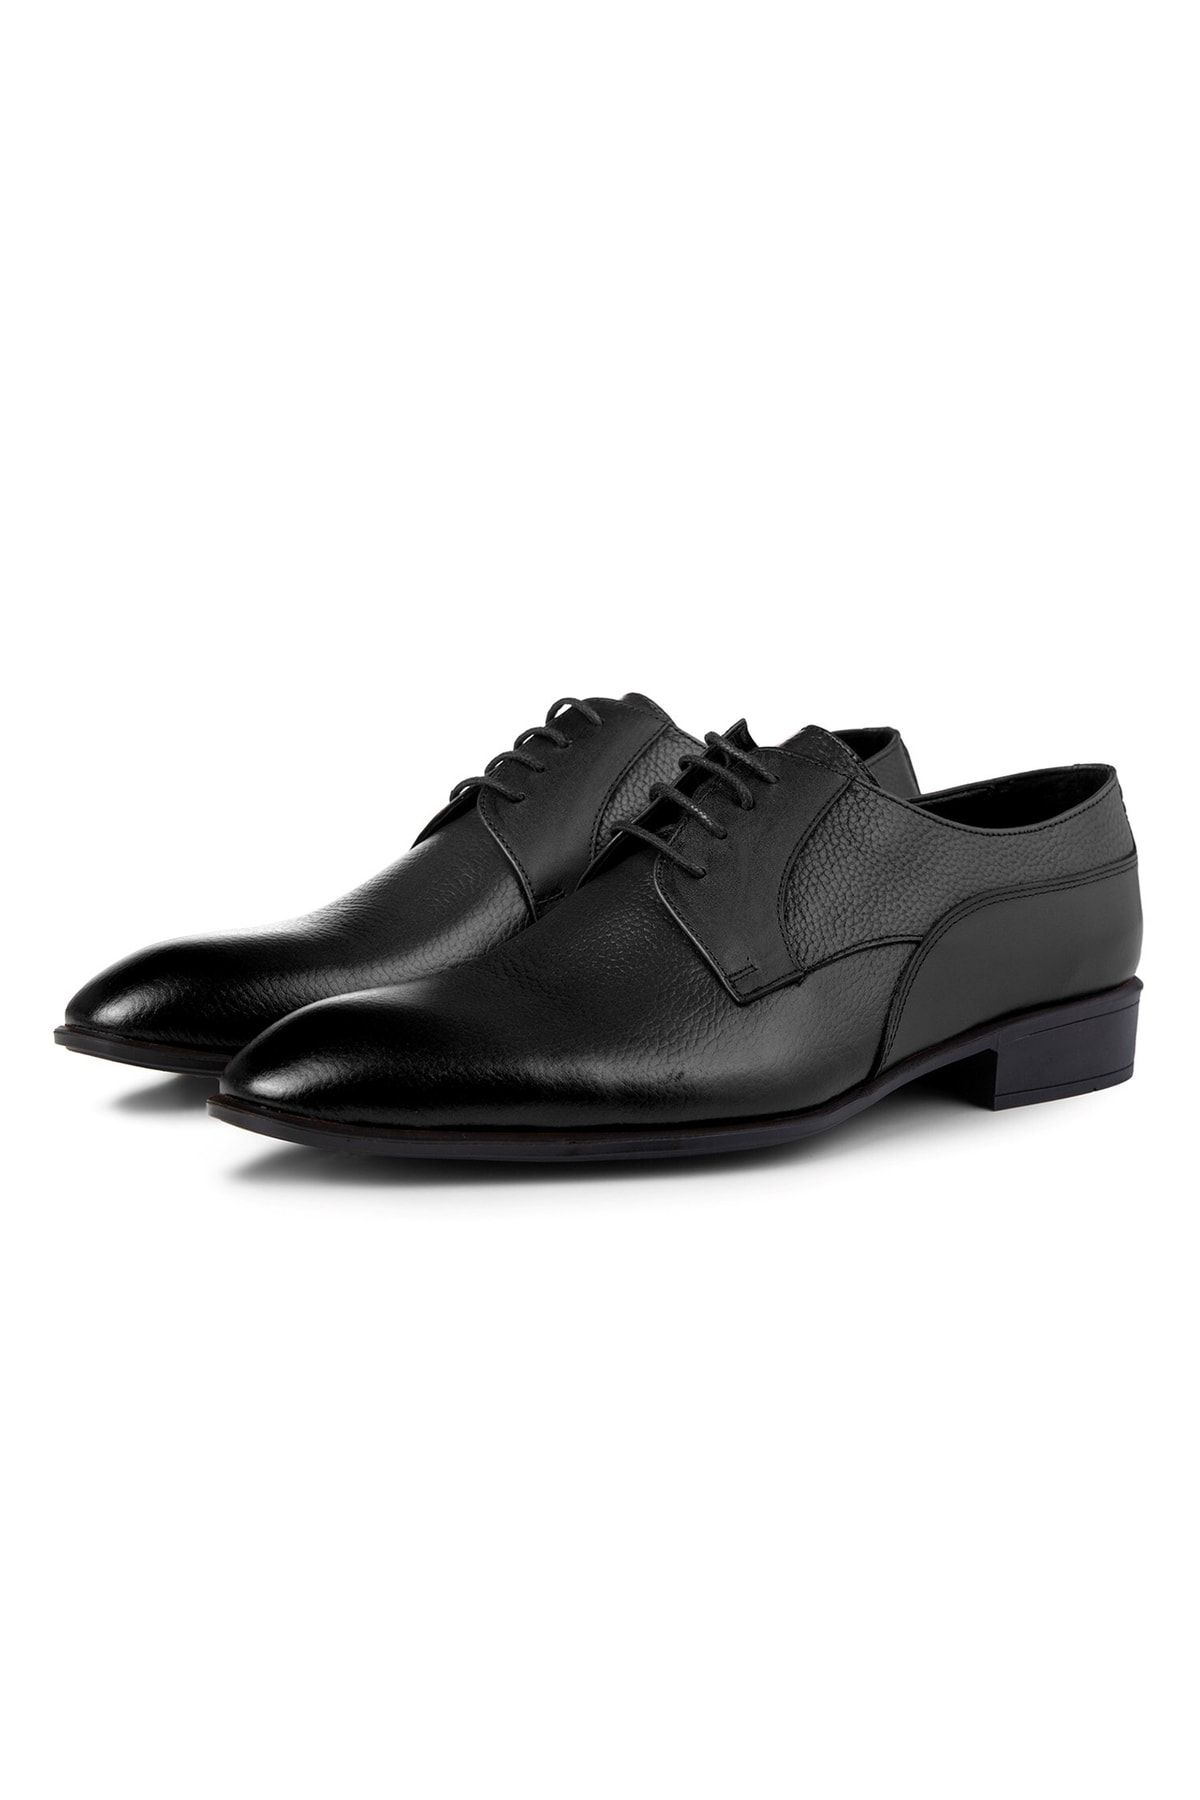 Ducavelli Elite Hakiki Deri Erkek Klasik Ayakkabı Derby Klasik Ayakkabı Bağcıklı Klasik Ayakkabı